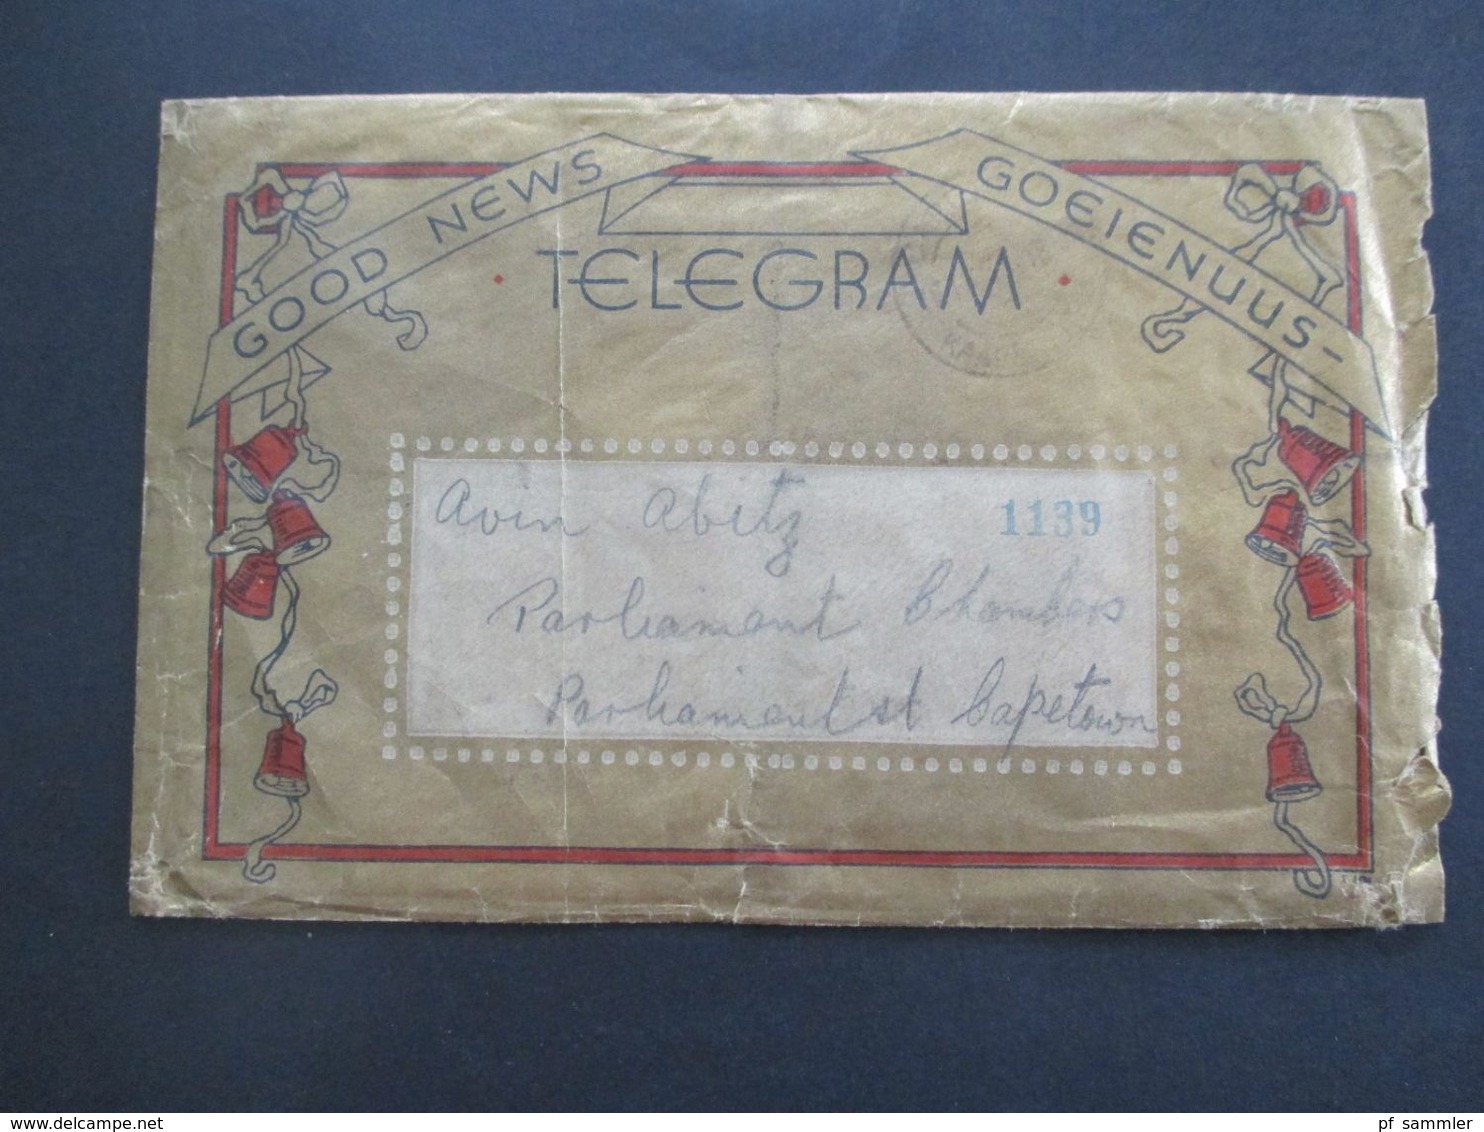 Südafrika Um 1930 ?! Telegram Goldener Umschlag Good News / Goeienuus An Das Parliament Capetown - Covers & Documents